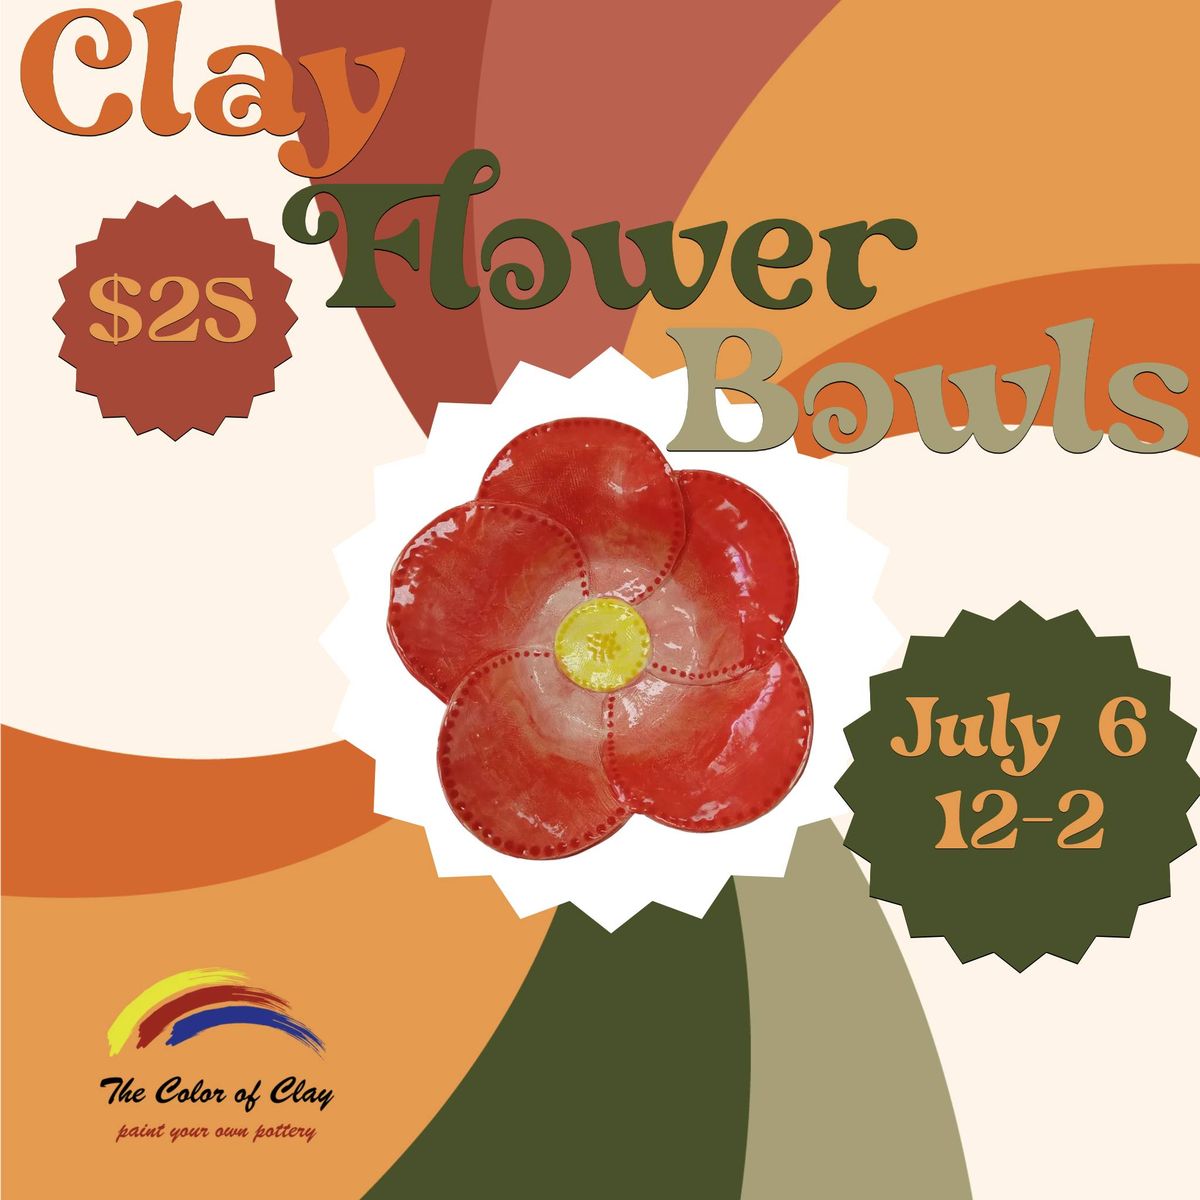 Clay Flower Bowl